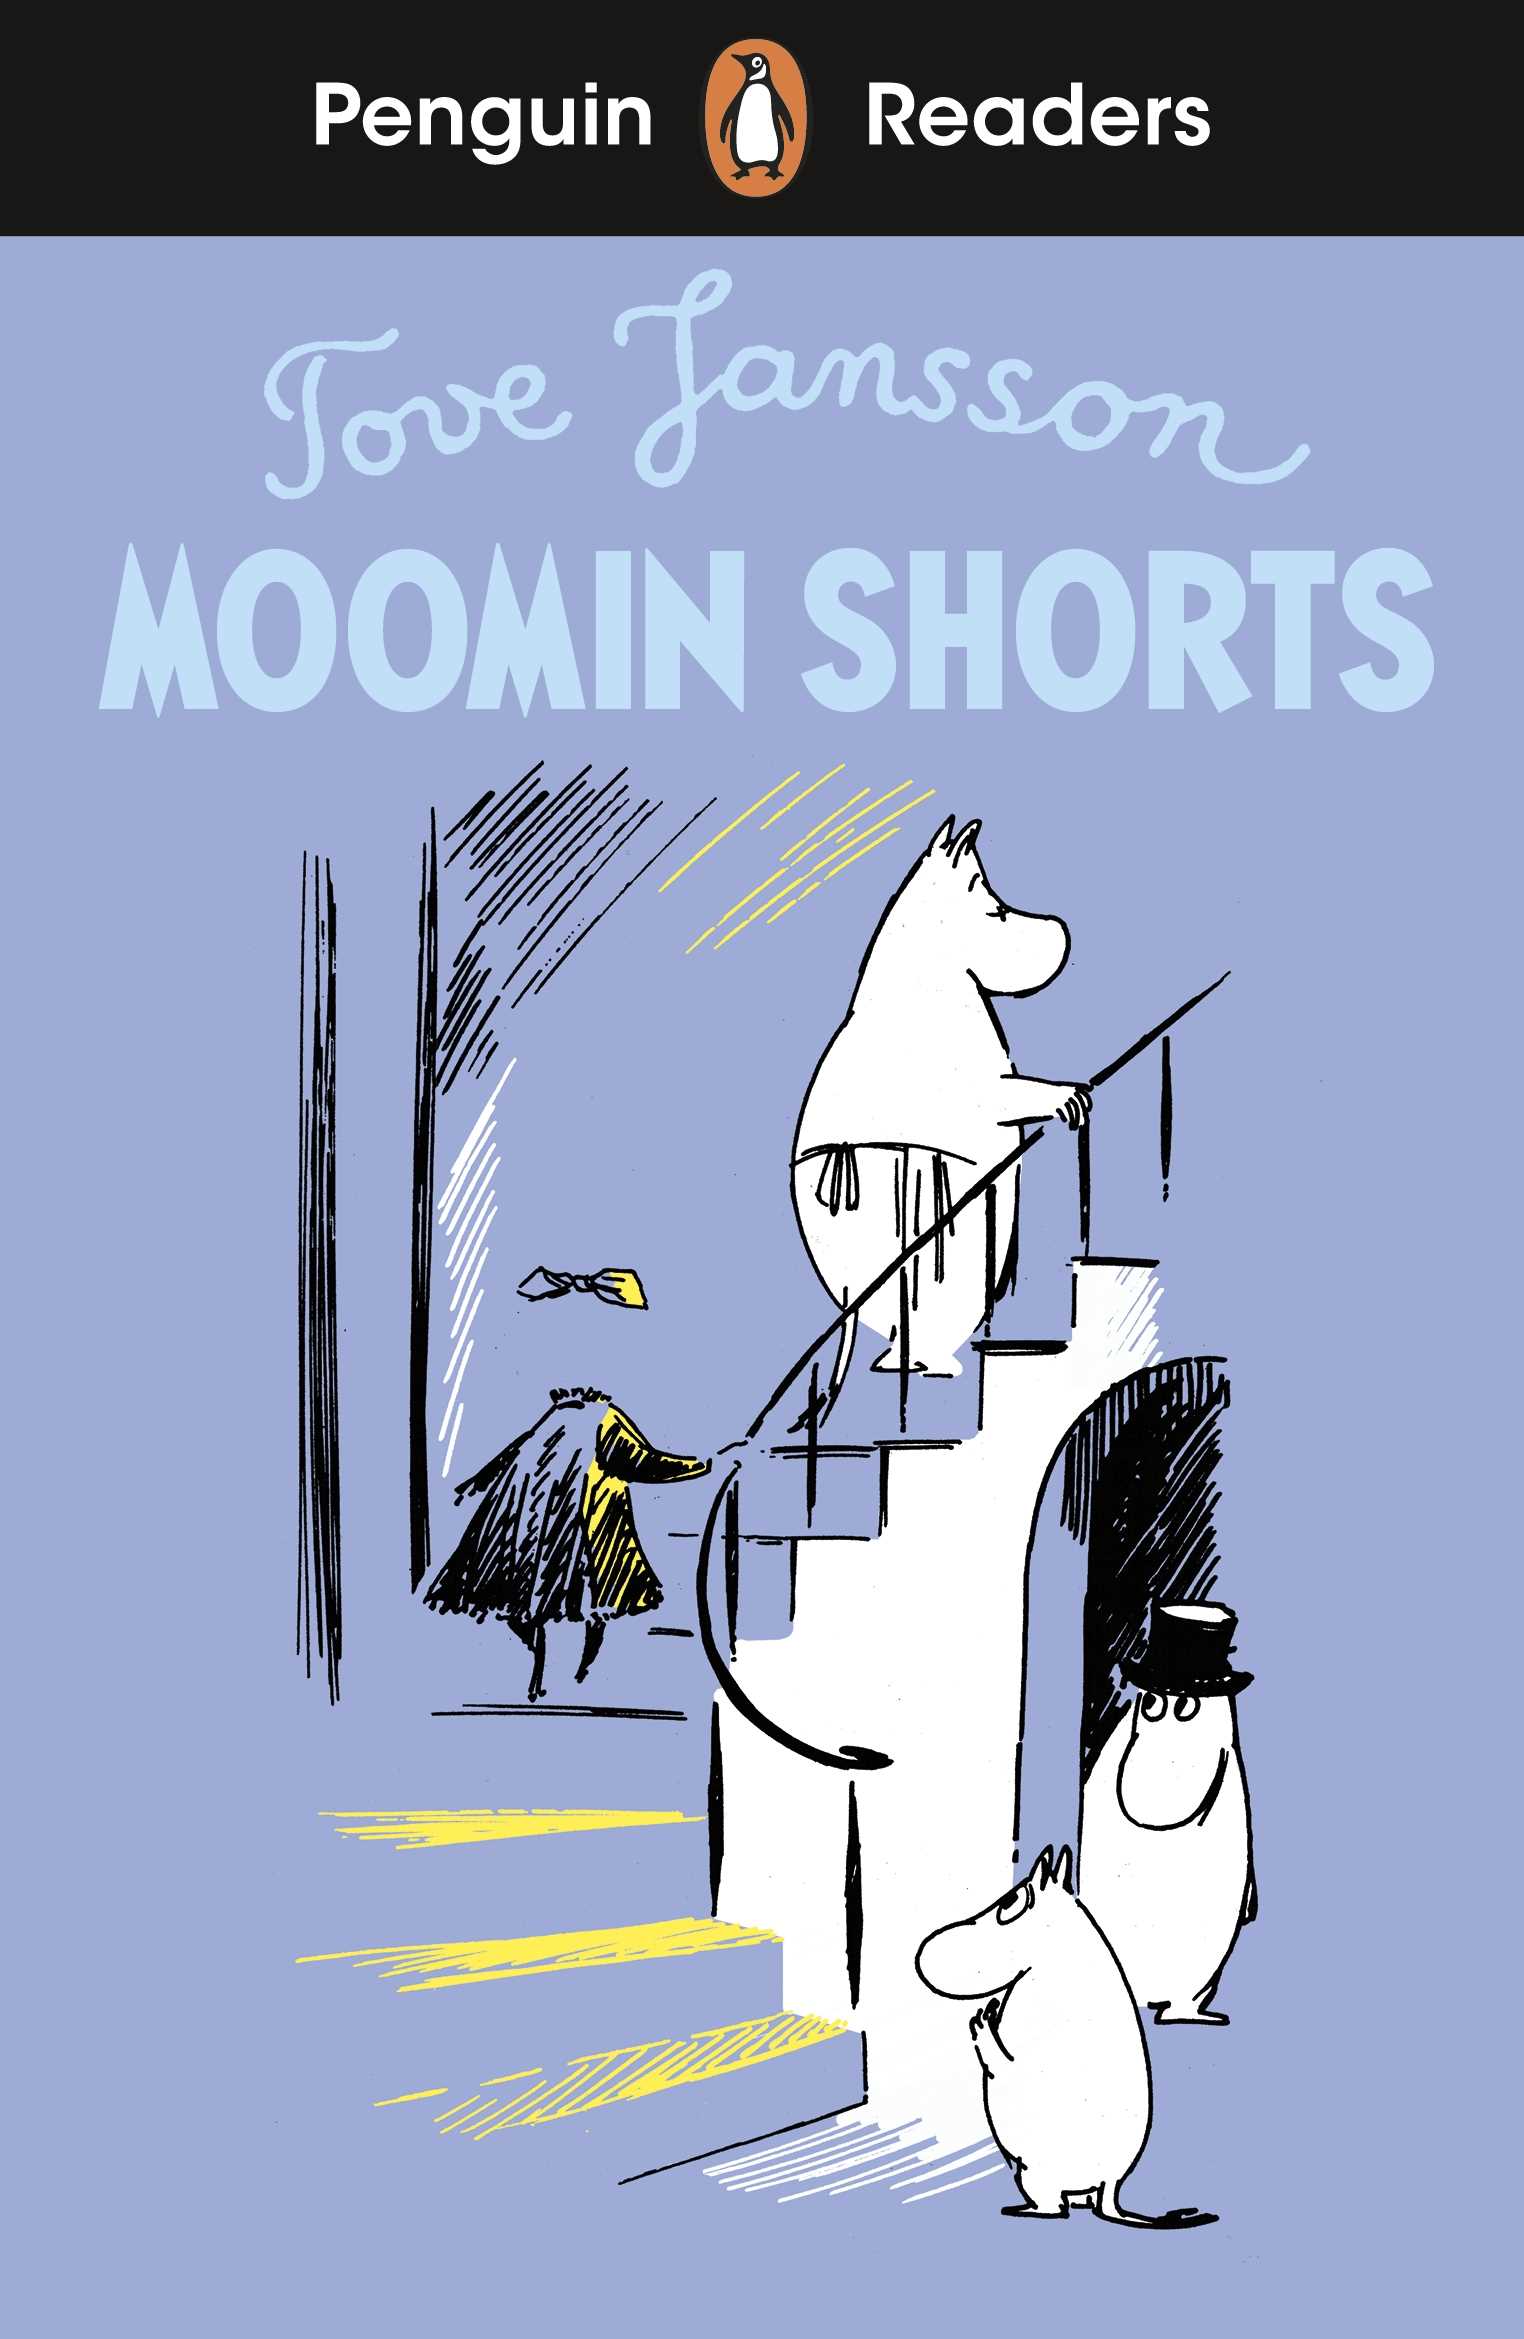 Moomin Shorts (Penguin Readers L2)